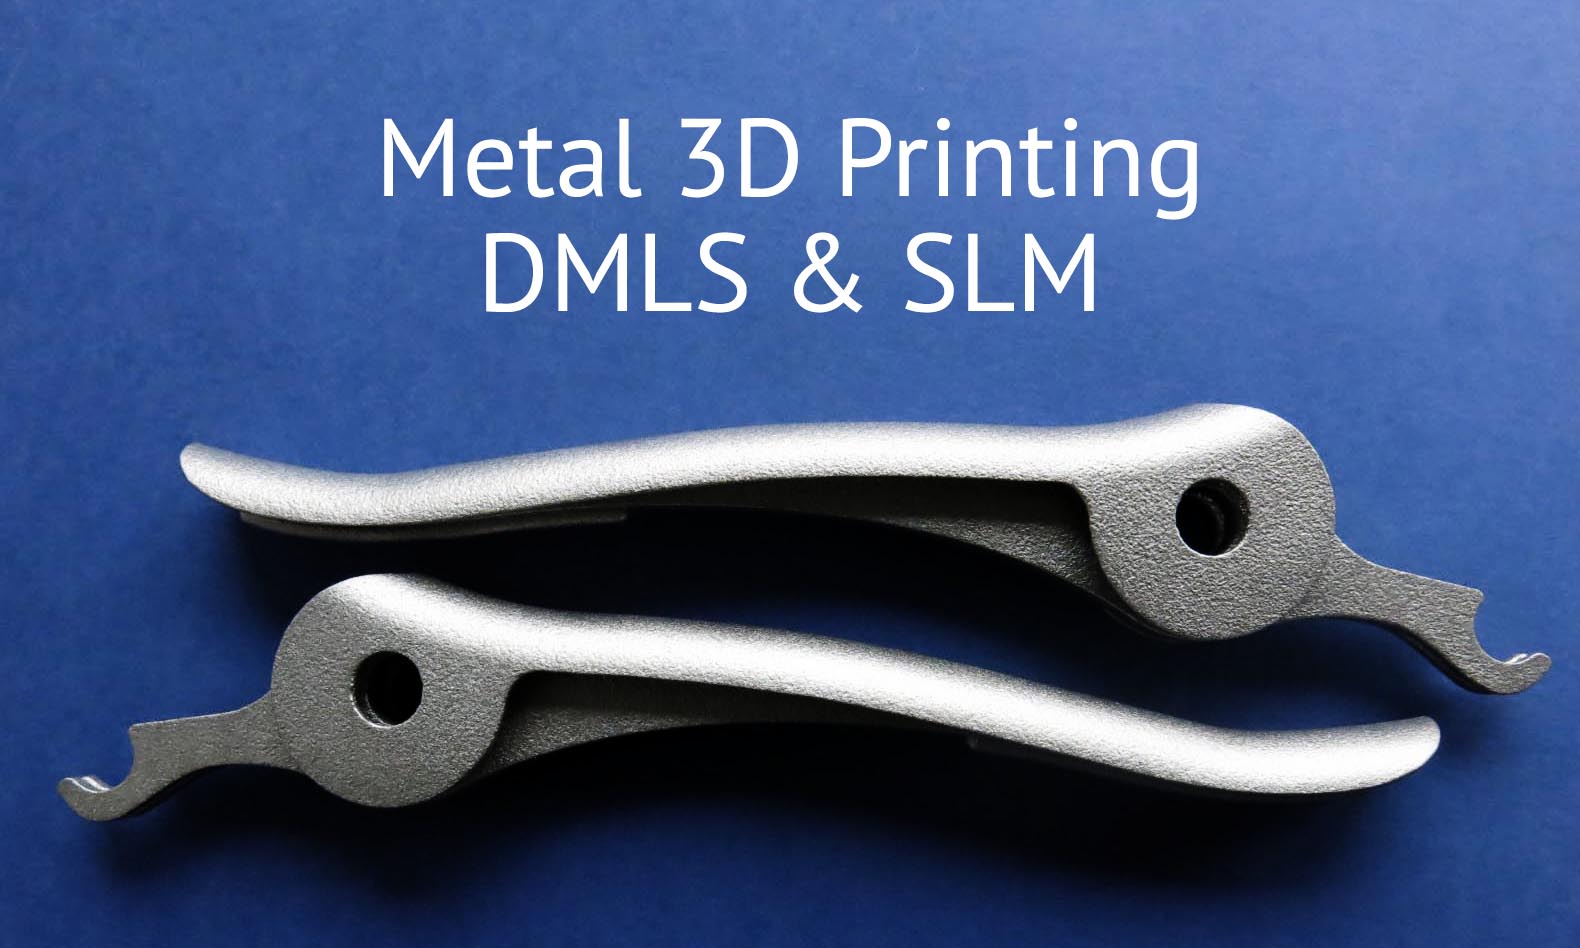 Tout connaître sur l’impression 3D métal en 7 questions | 3D Printing Blog: Tutorials, News, Trends and Resources | Sculpteo